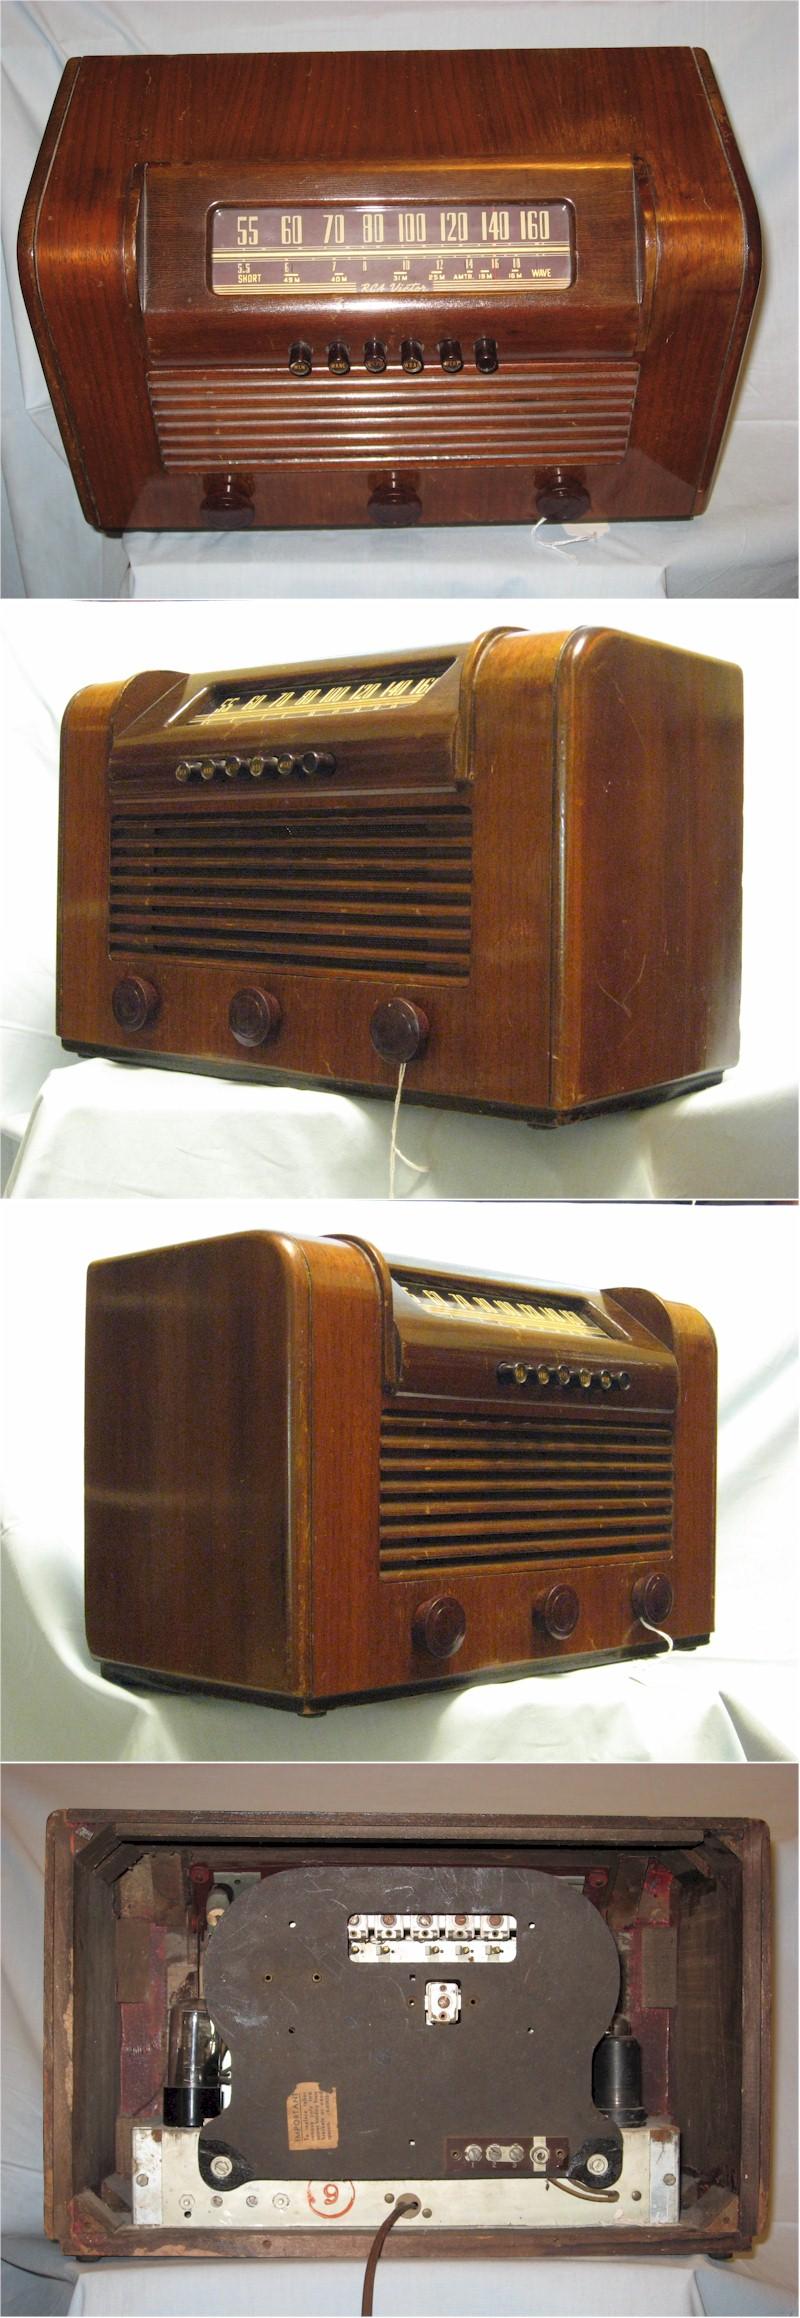 RCA 16X14 (1940)